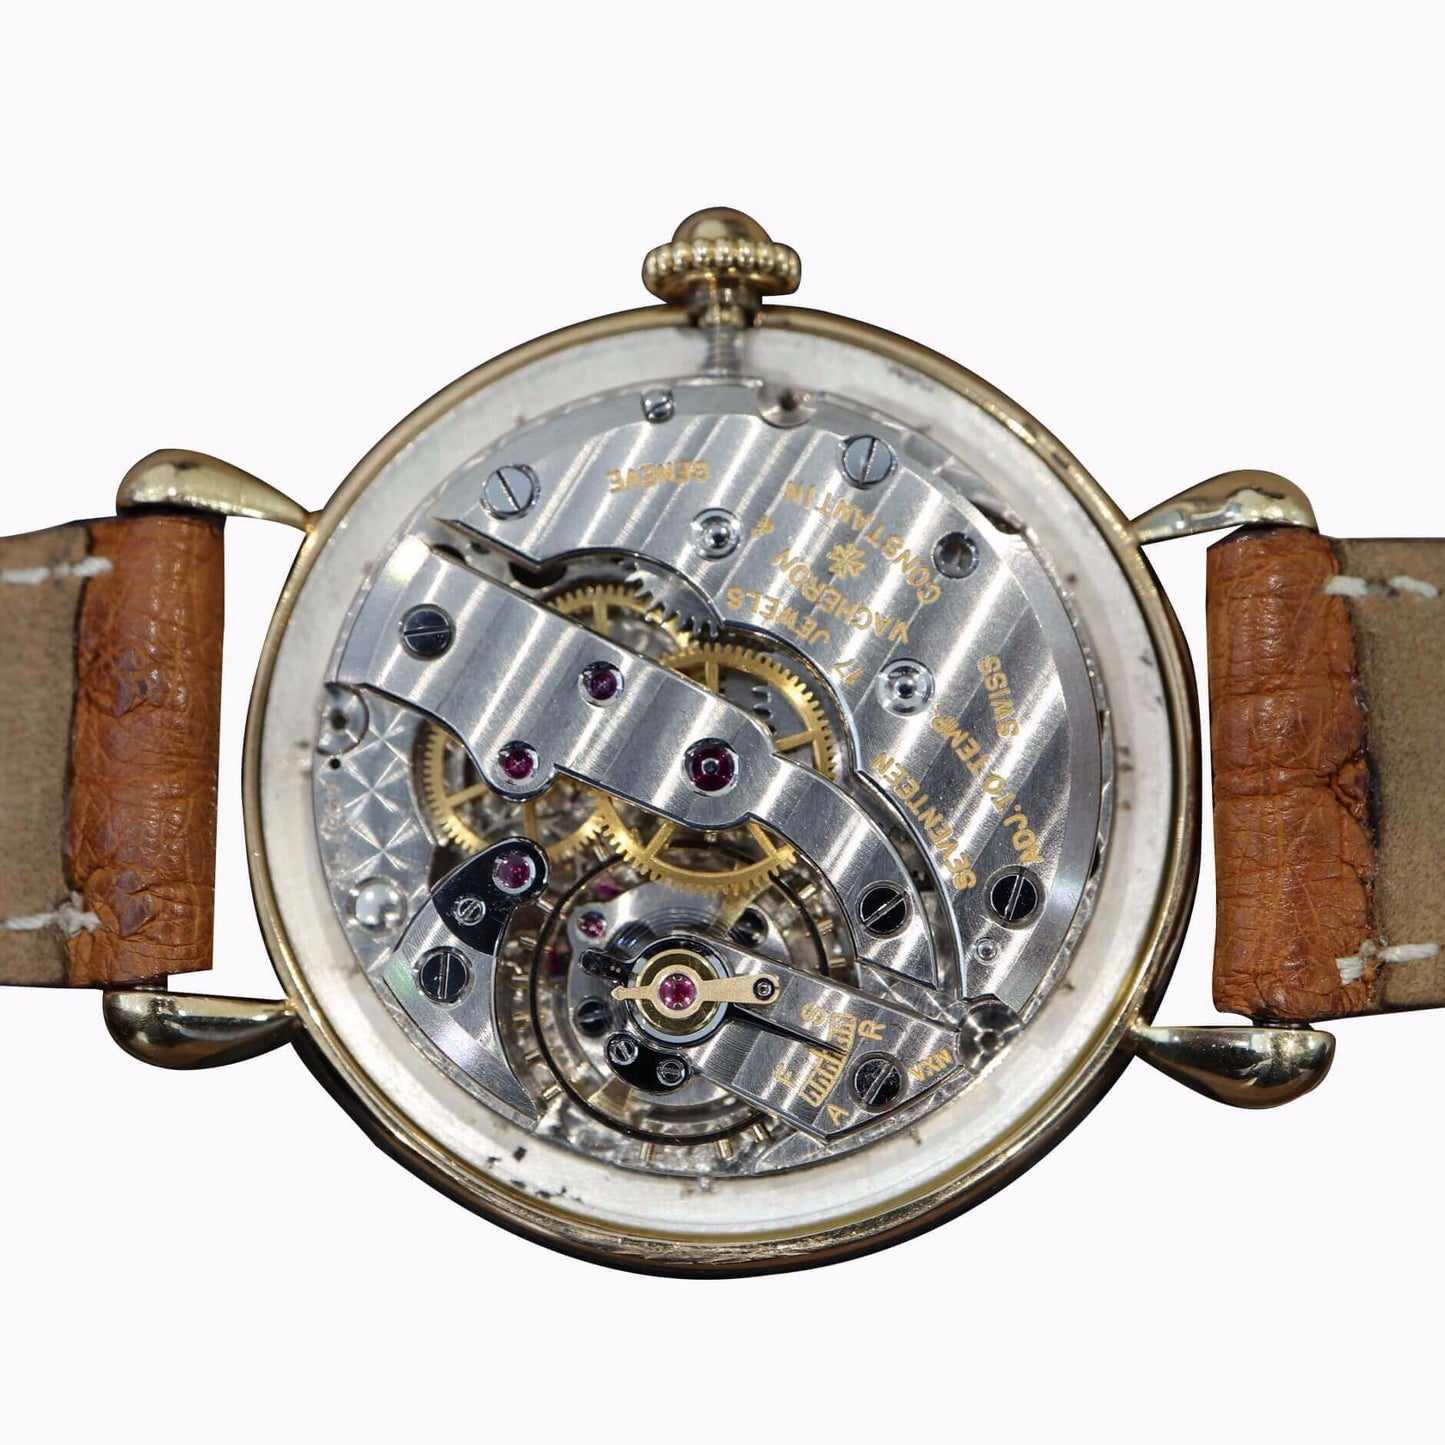 Vacheron Constantin Tear Drop Lugs Vintage Men's Gold Watch